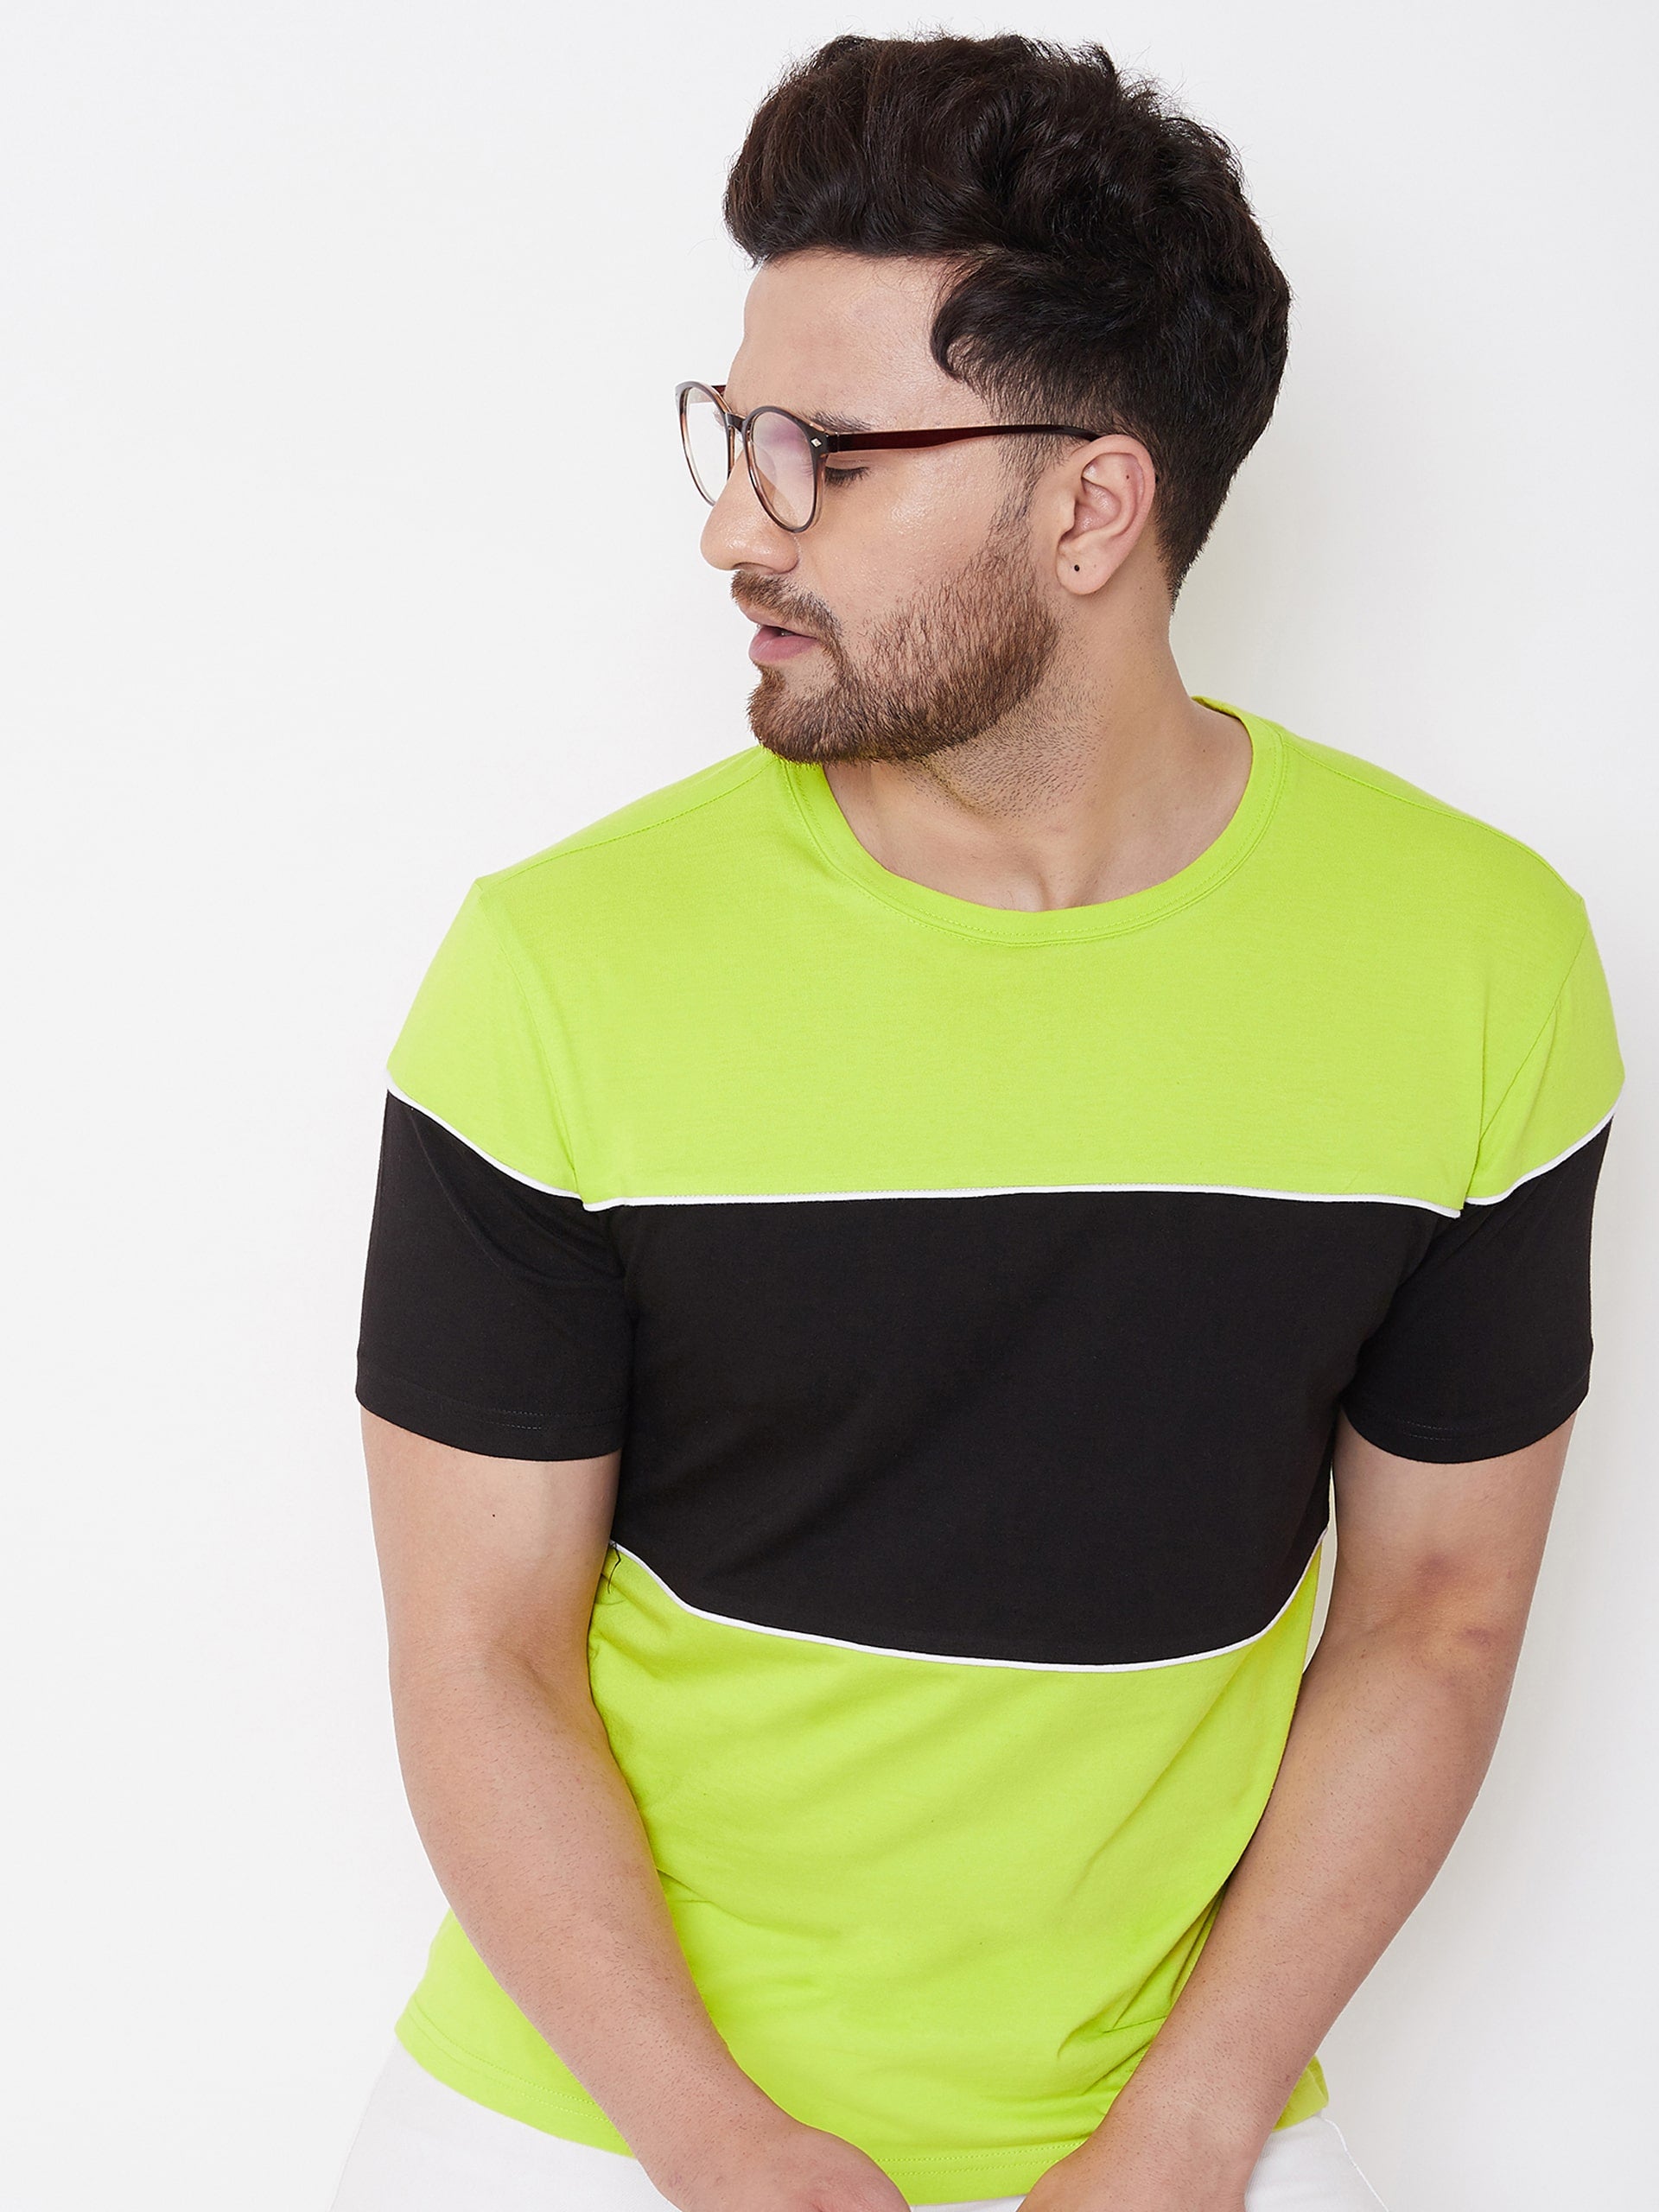 Neon Green/Black/White Men's Half Sleeves Round Neck T-Shirt